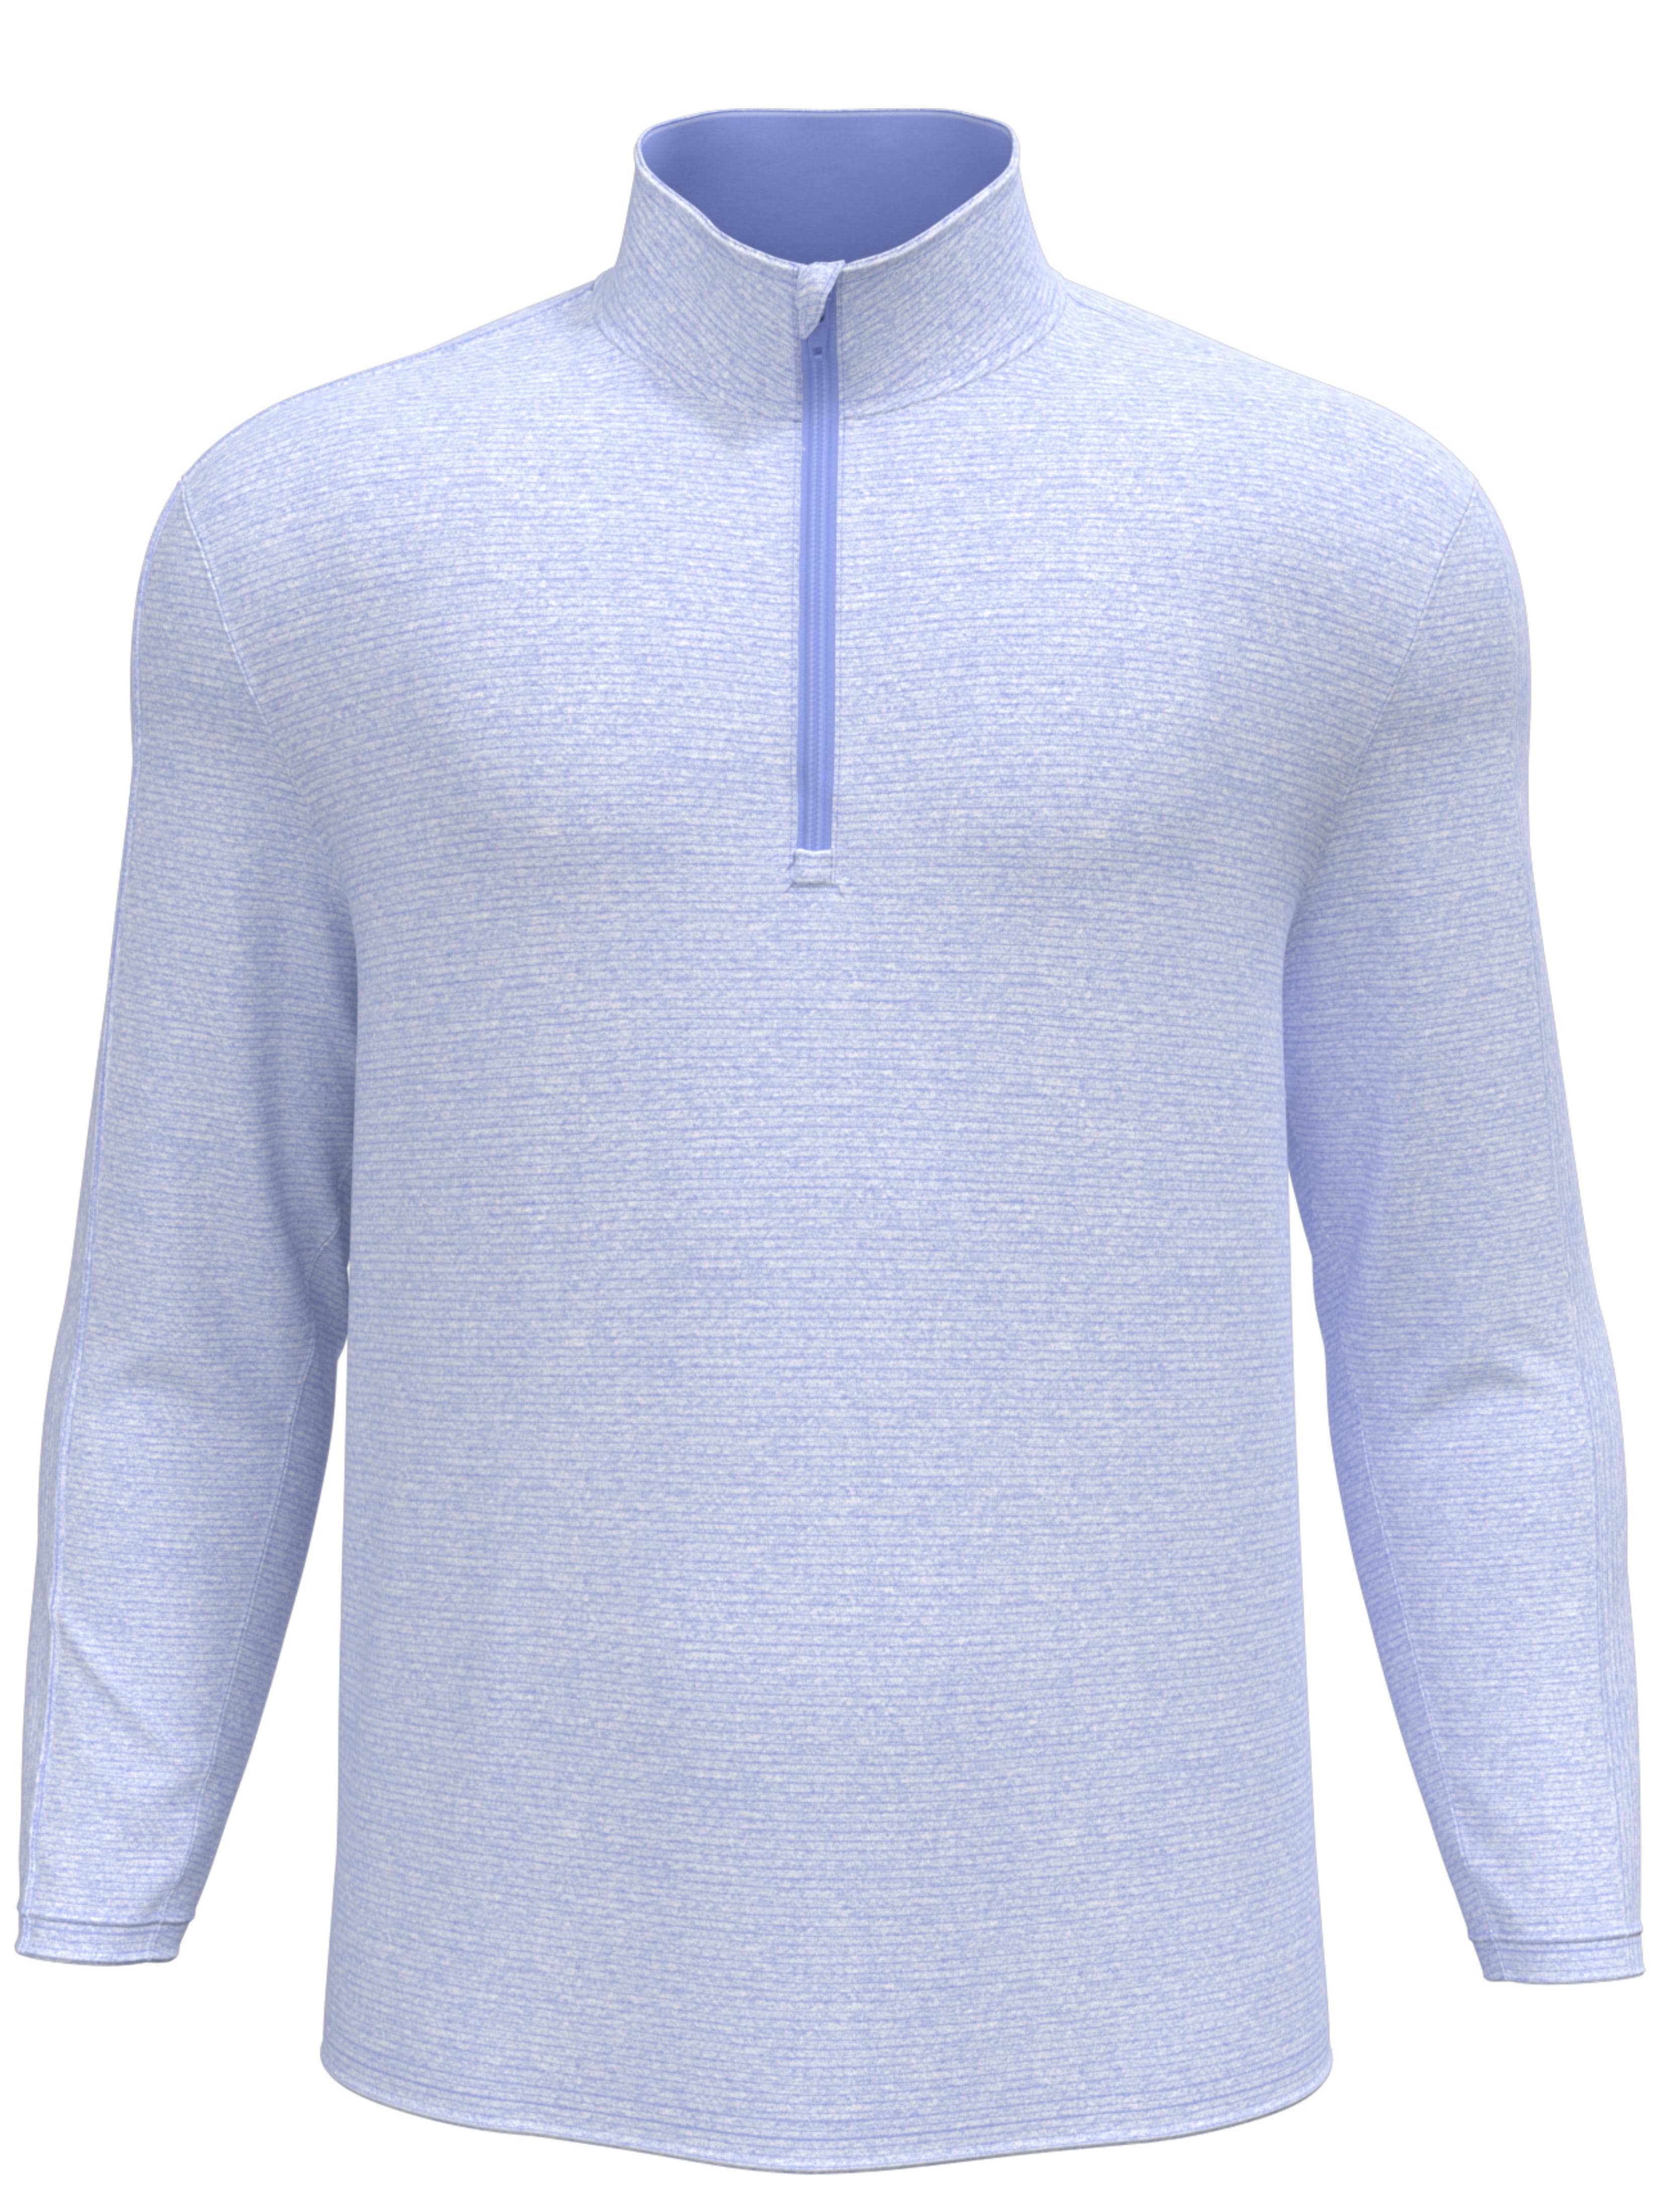 Jack Nicklaus Mens 1/4 Zip Sun Shade Base Layer Golf Shirt, Size Large, Light Coastline Bl Heather Blue, Polyester/Elastane | Golf Apparel Shop